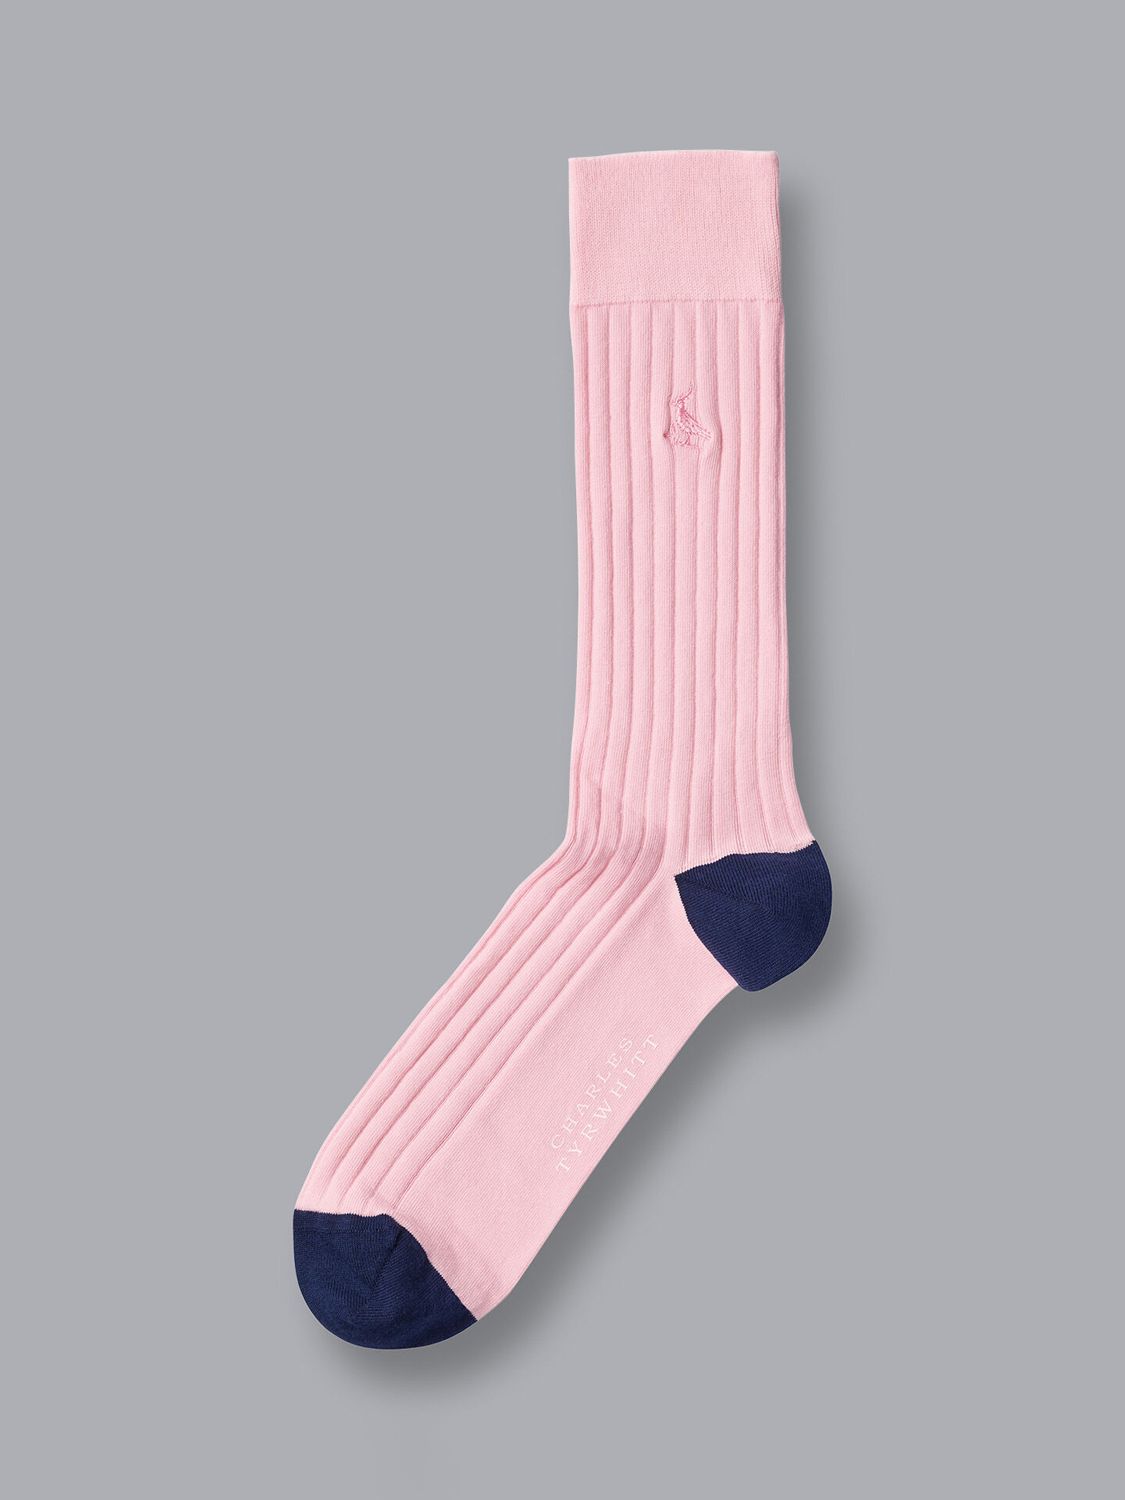 Charles Tyrwhitt Cotton Rib Socks, Light Pink at John Lewis & Partners